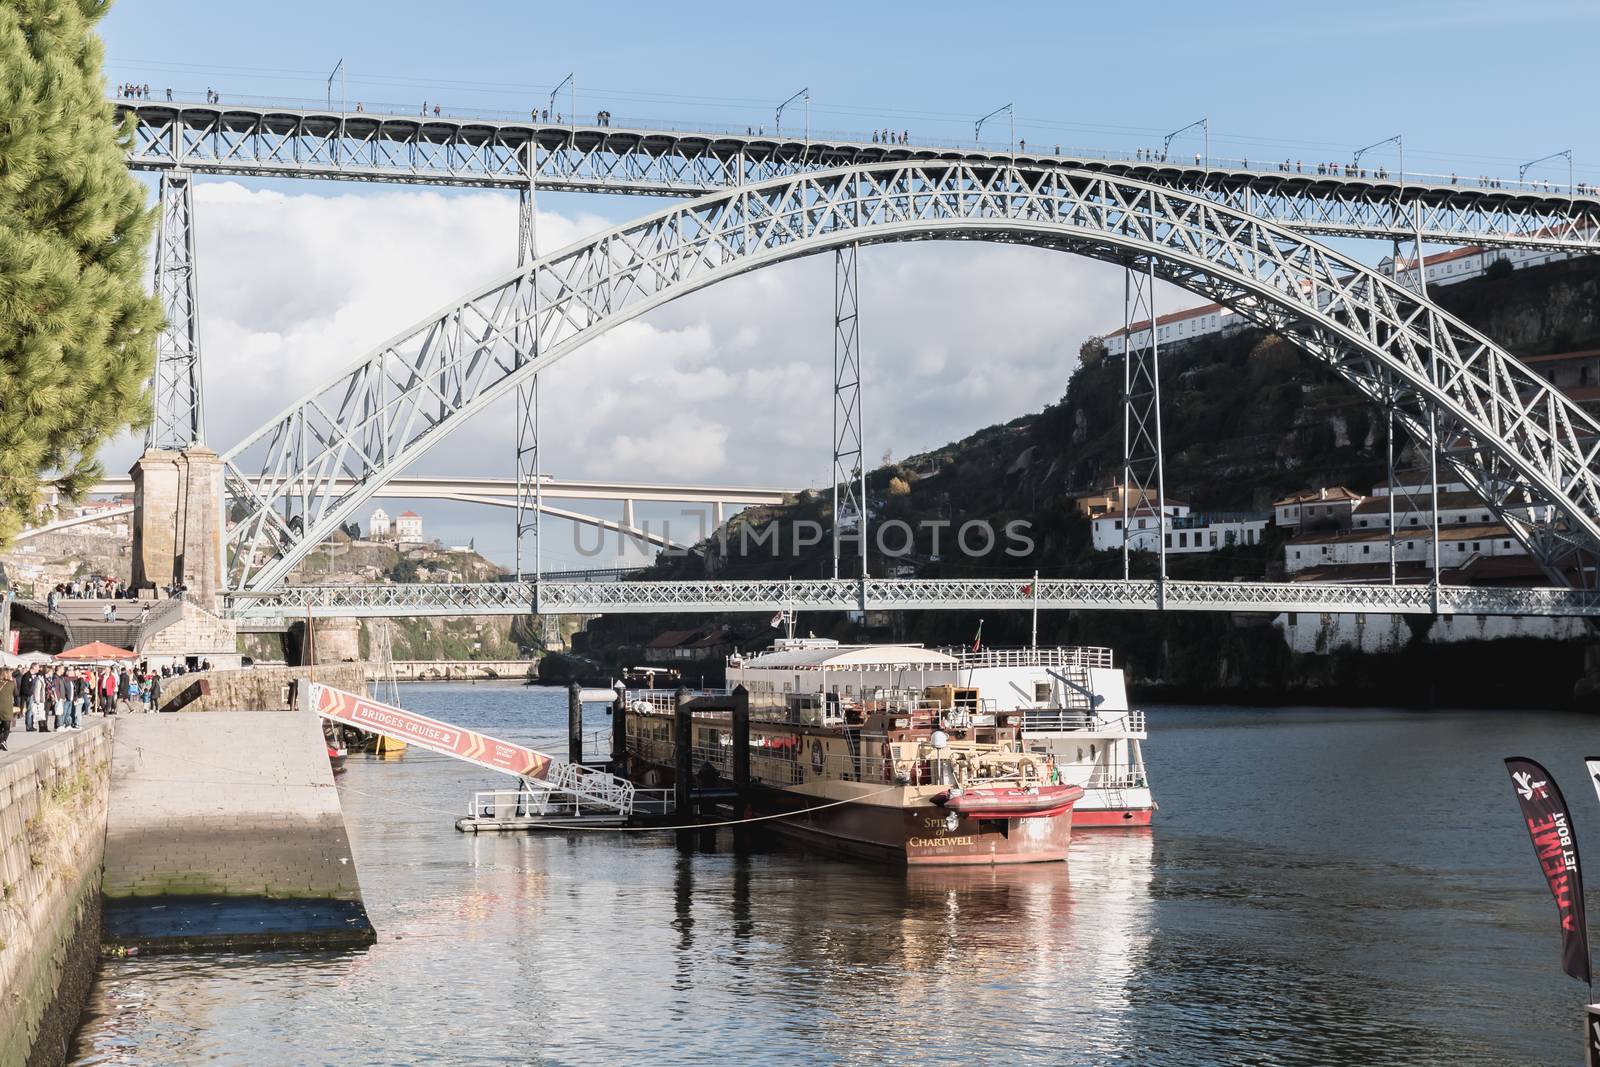 View of the Luizi Bridge and the atmosphere around in Porto, Por by AtlanticEUROSTOXX